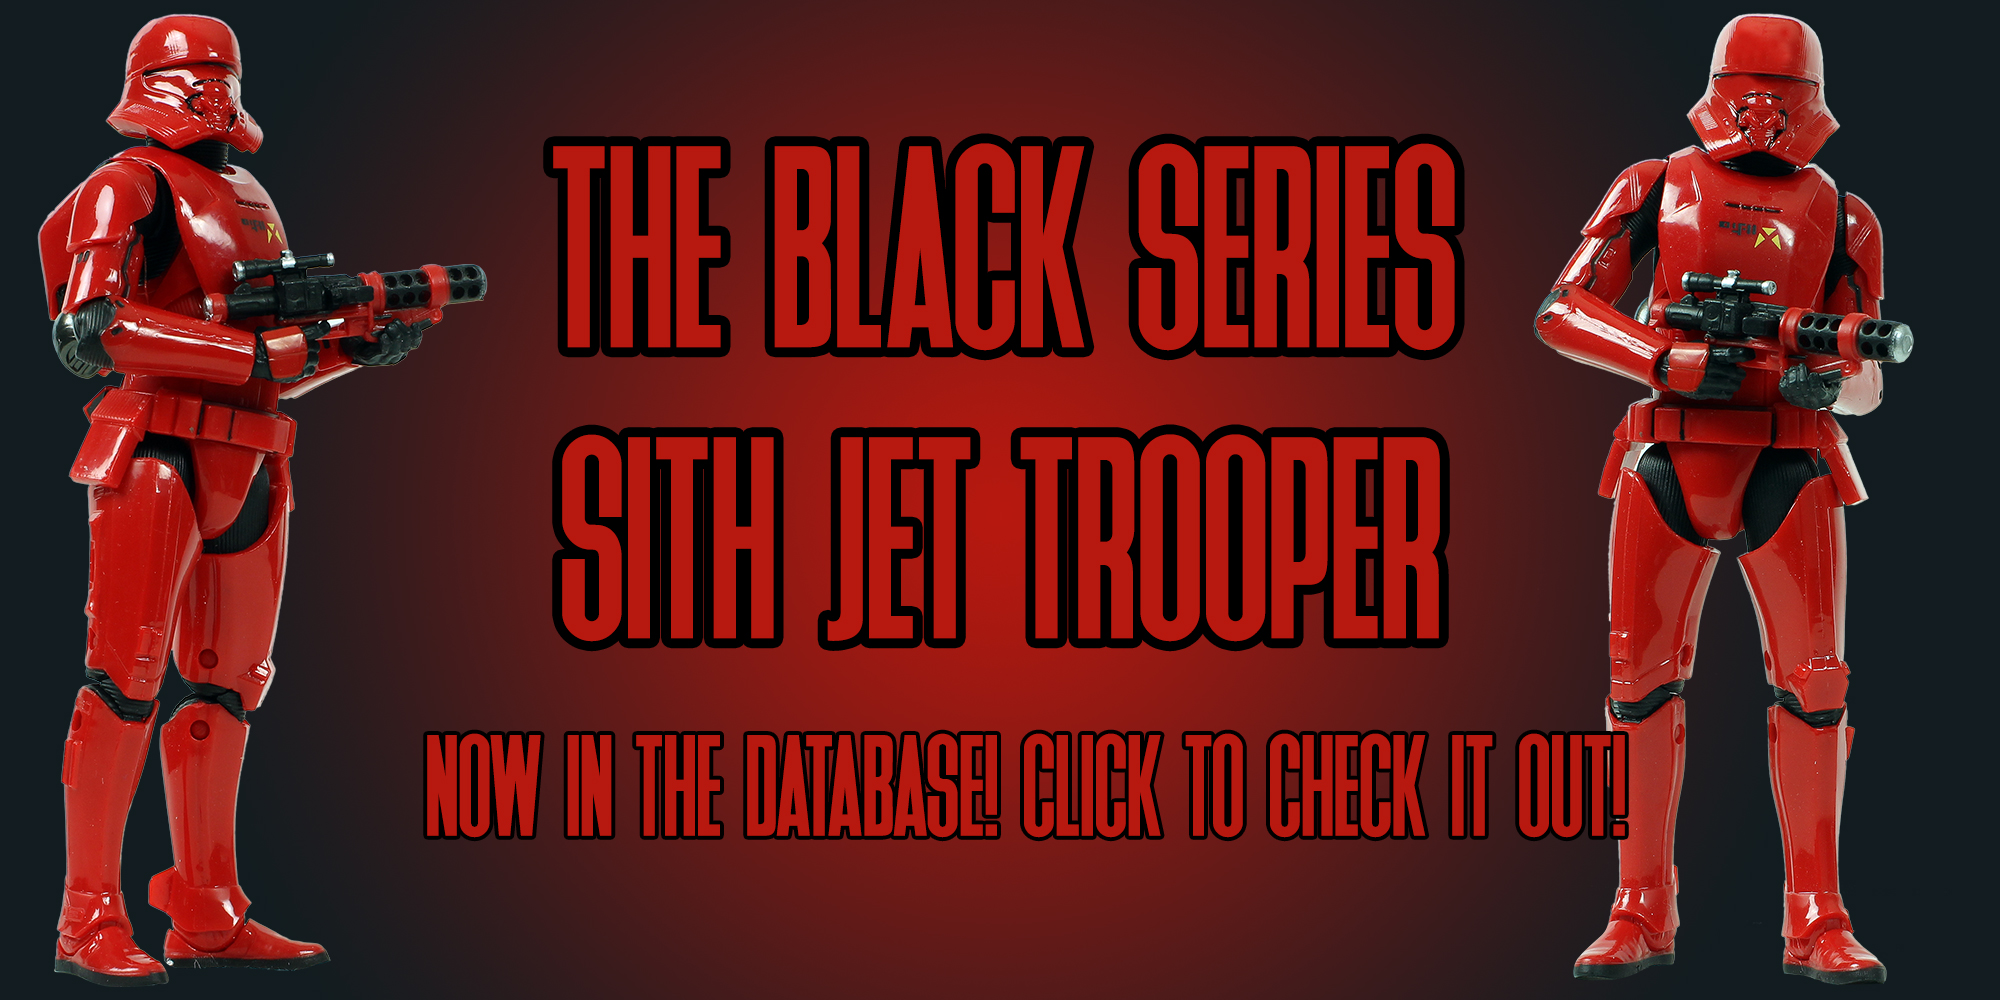 Black Series Sith Jet Trooper